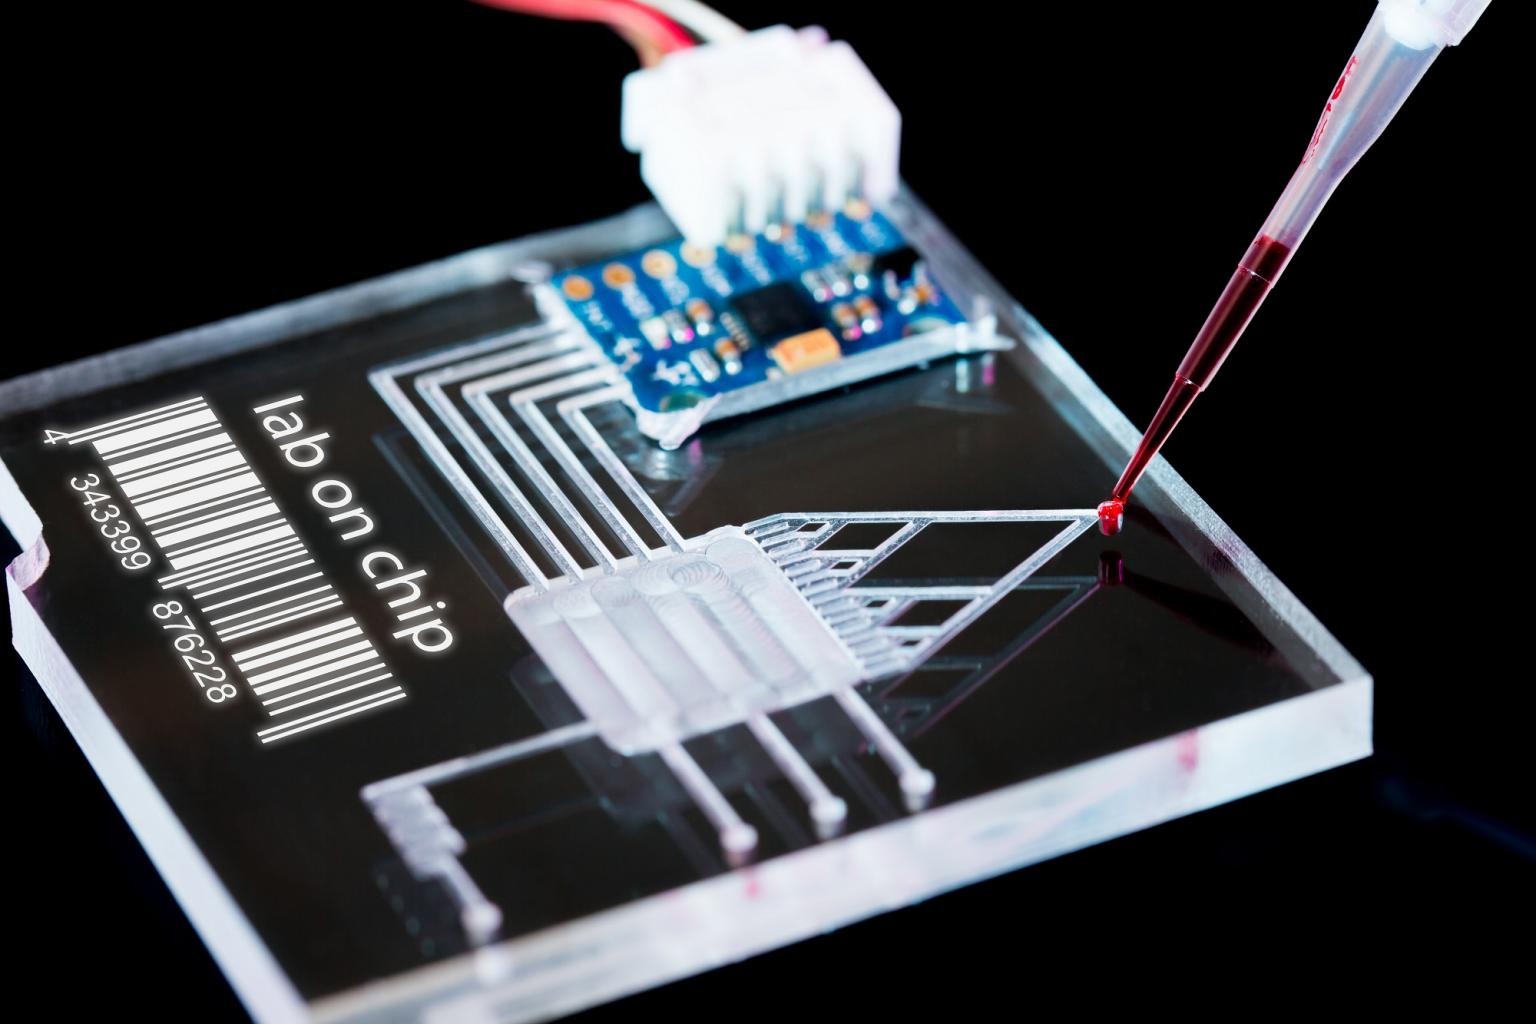 Siliconbased microfluidics Engineer Live